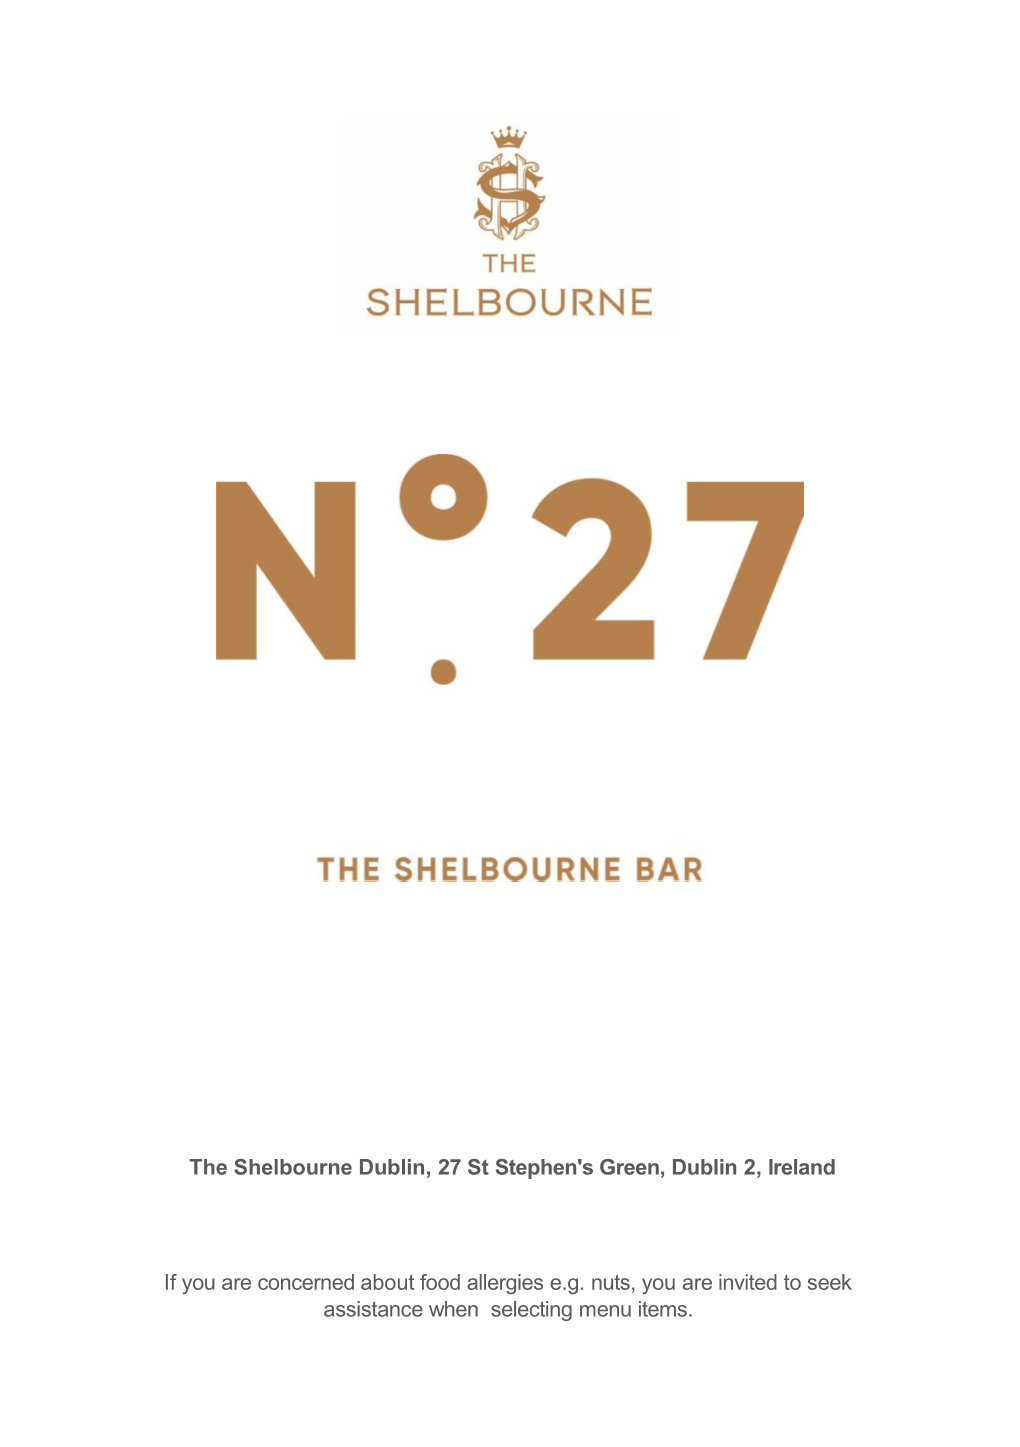 The Shelbourne Dublin, 27 St Stephen's Green, Dublin 2, Ireland